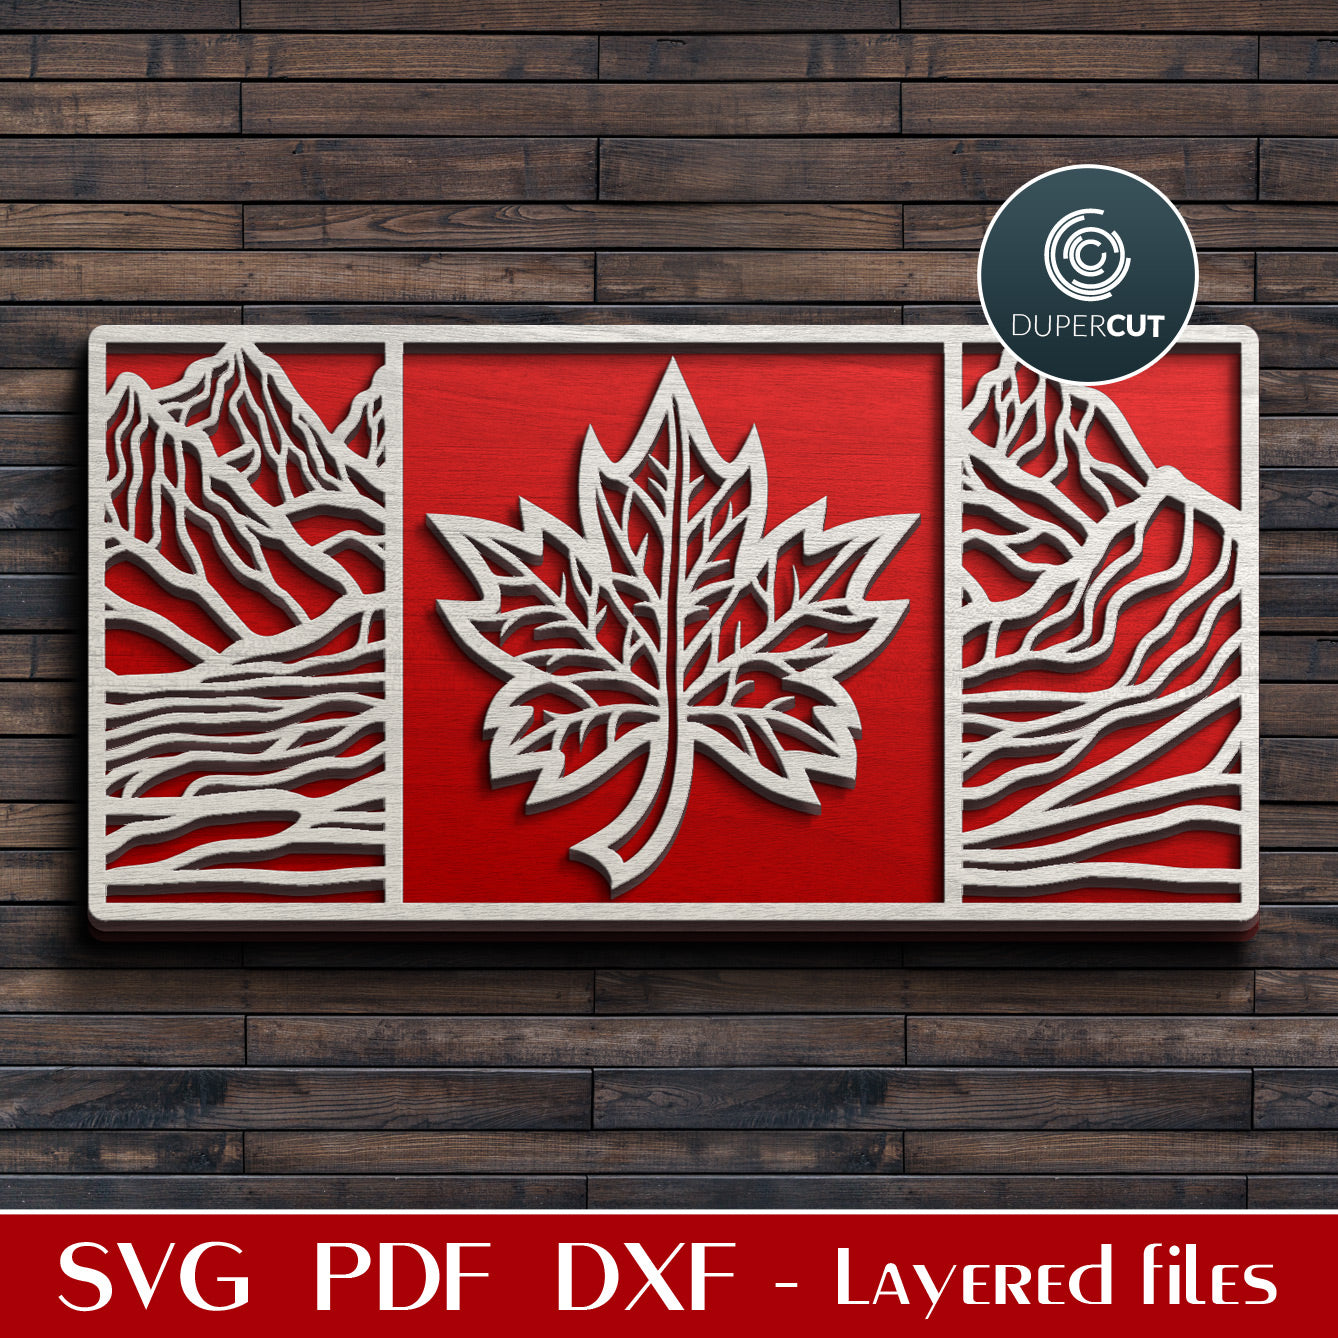 Canadian flag wall decor - SVG DXF layered cut files for laser and digital machines Glowforge, Cricut, Xtool, CNC plasma, scroll saw pattern by www.DuperCut.com